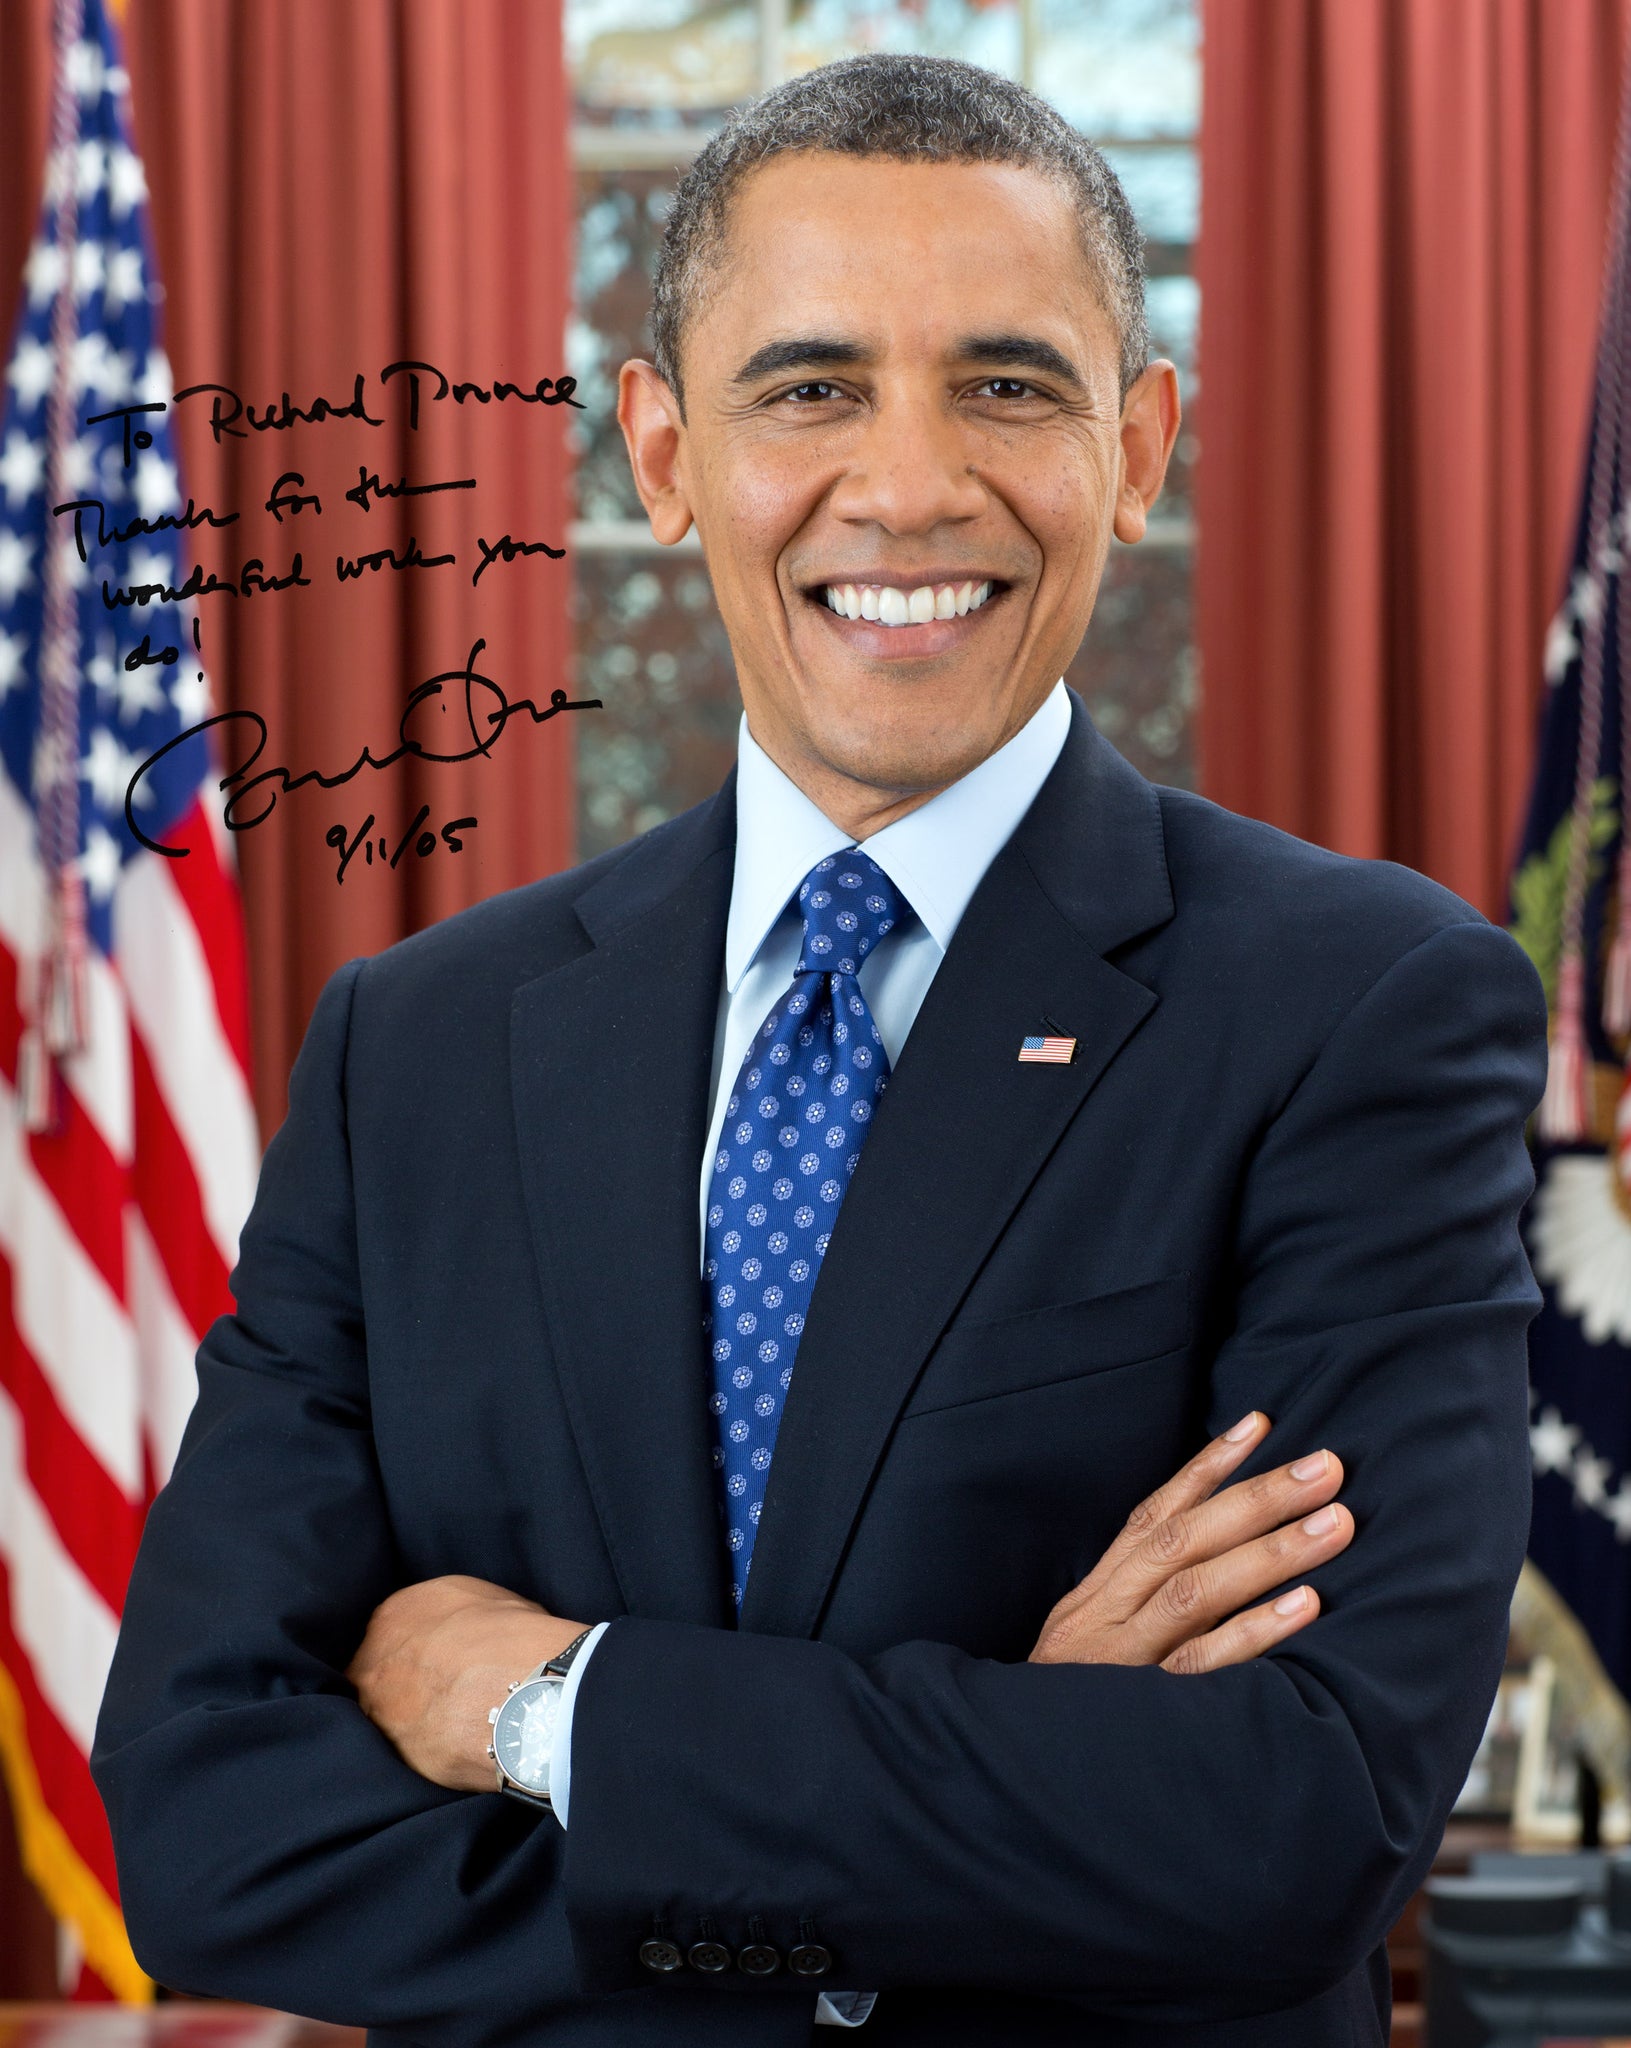 "Richard Prince" (Jonathan Paul), "All The More Best - Barack Obama"